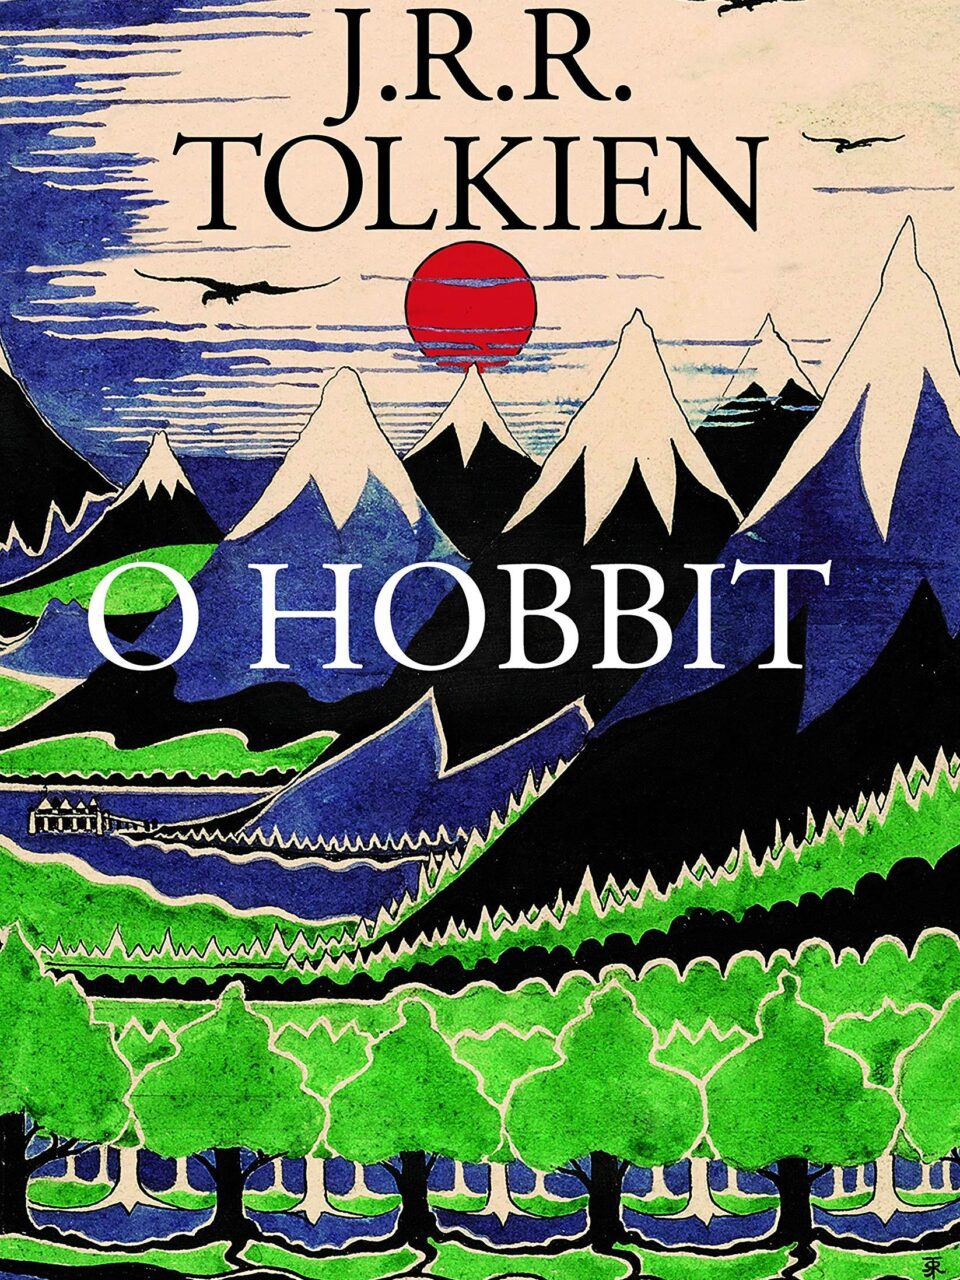 O Hobbit – J. R. R. Tolkien